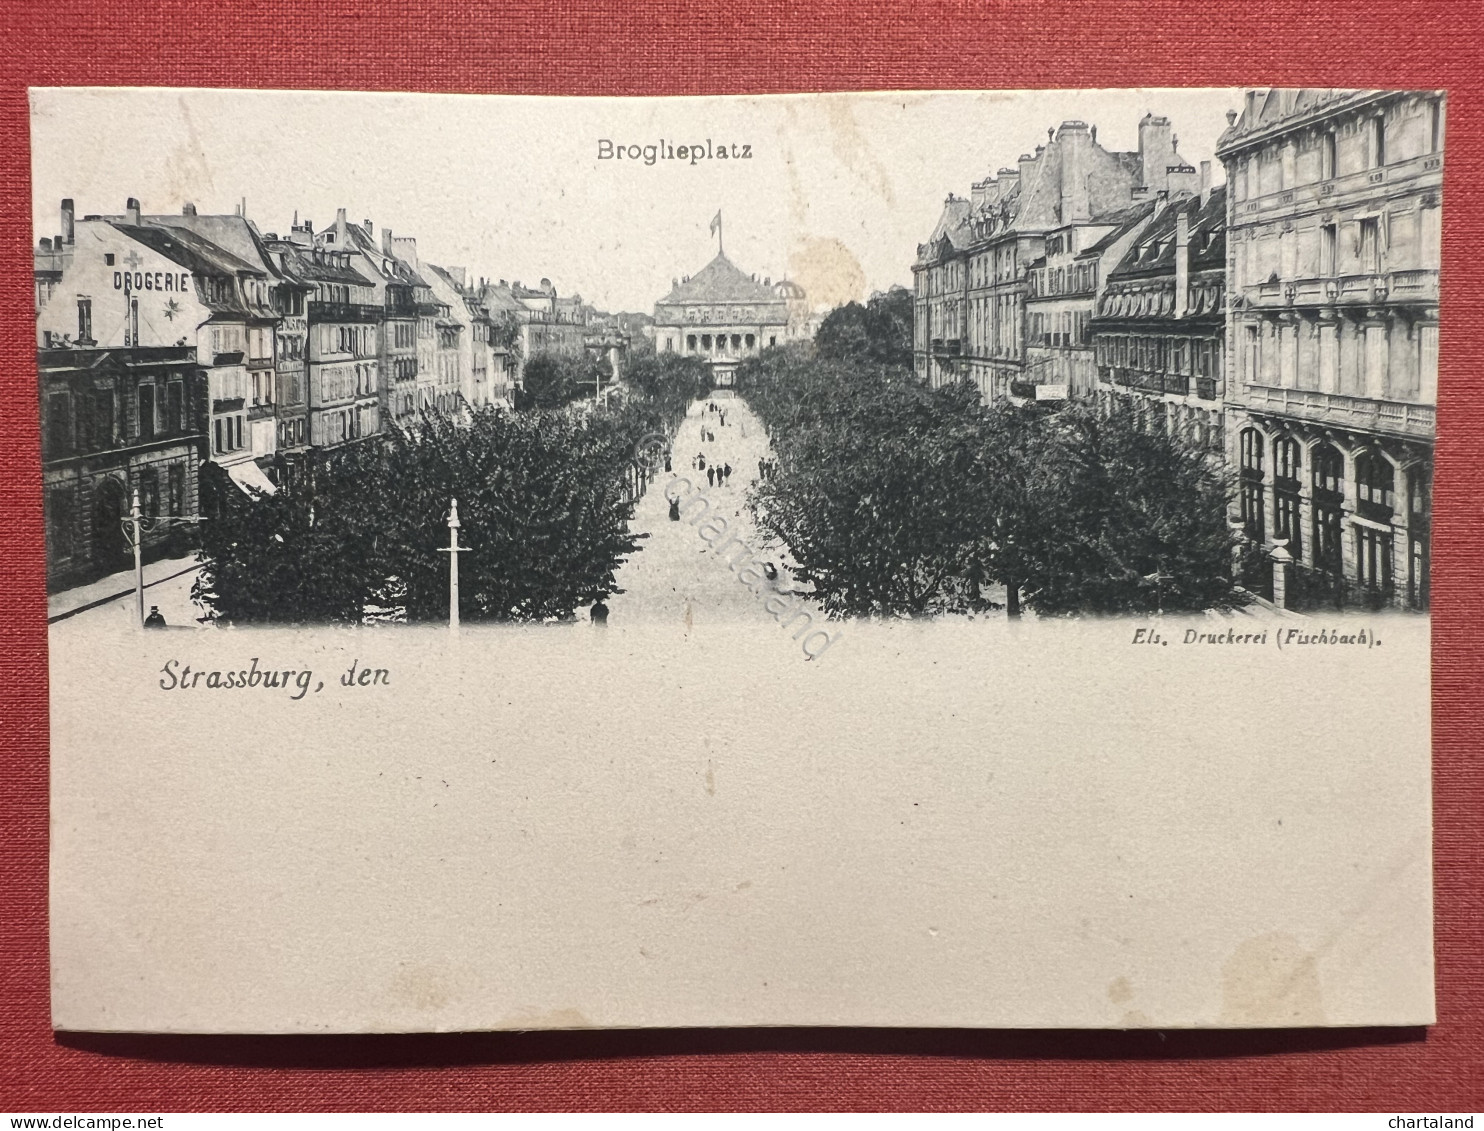 Cartolina - Strassburg, Den - Broglieplatz - 1900 Ca. - Unclassified